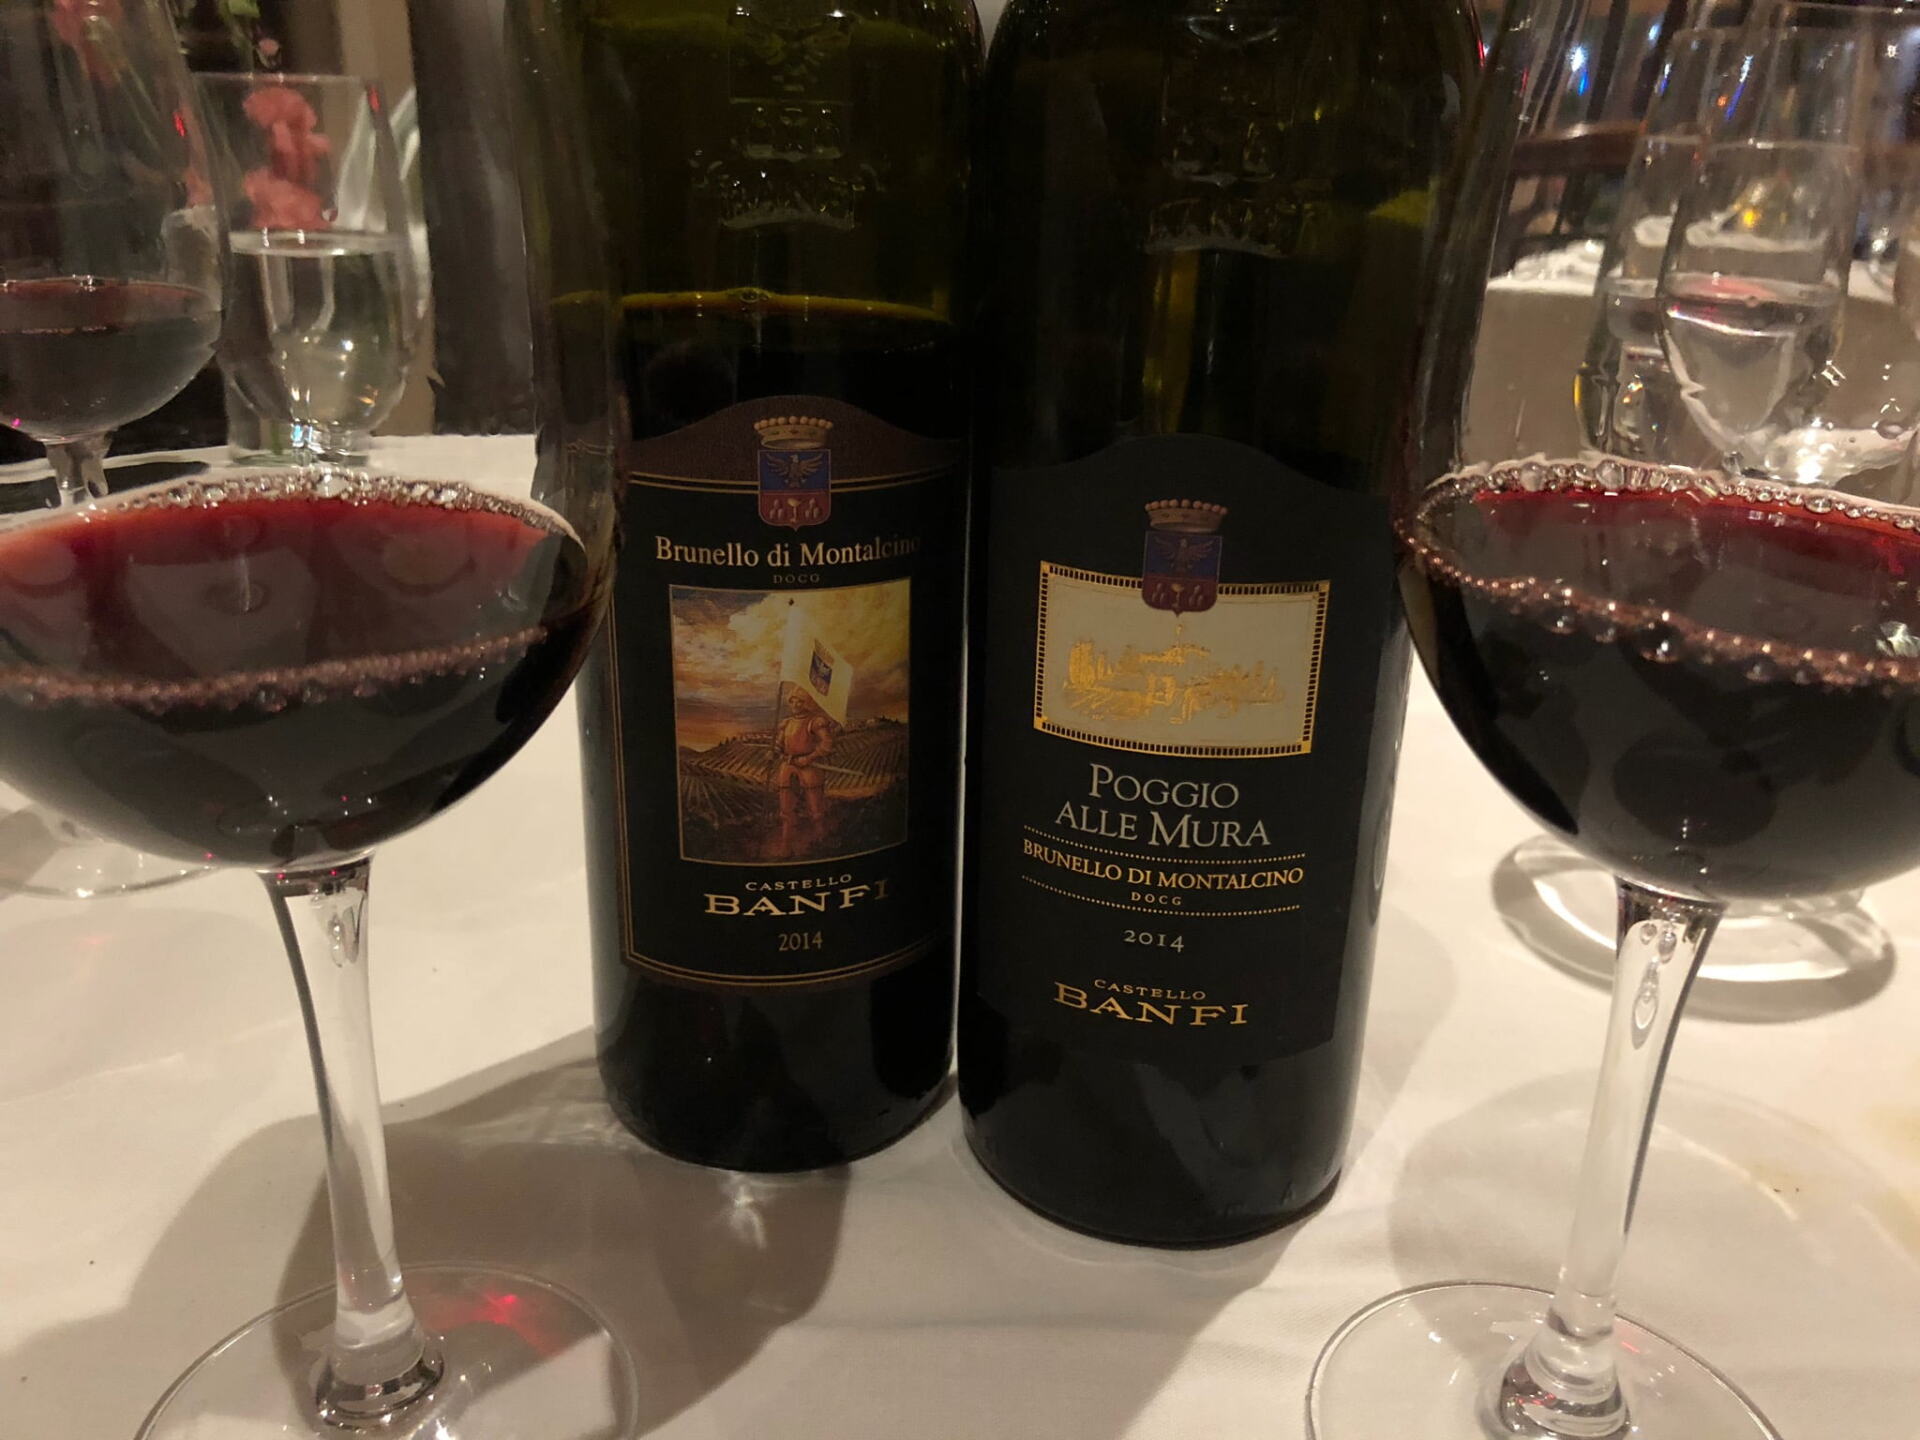 Brunello wine